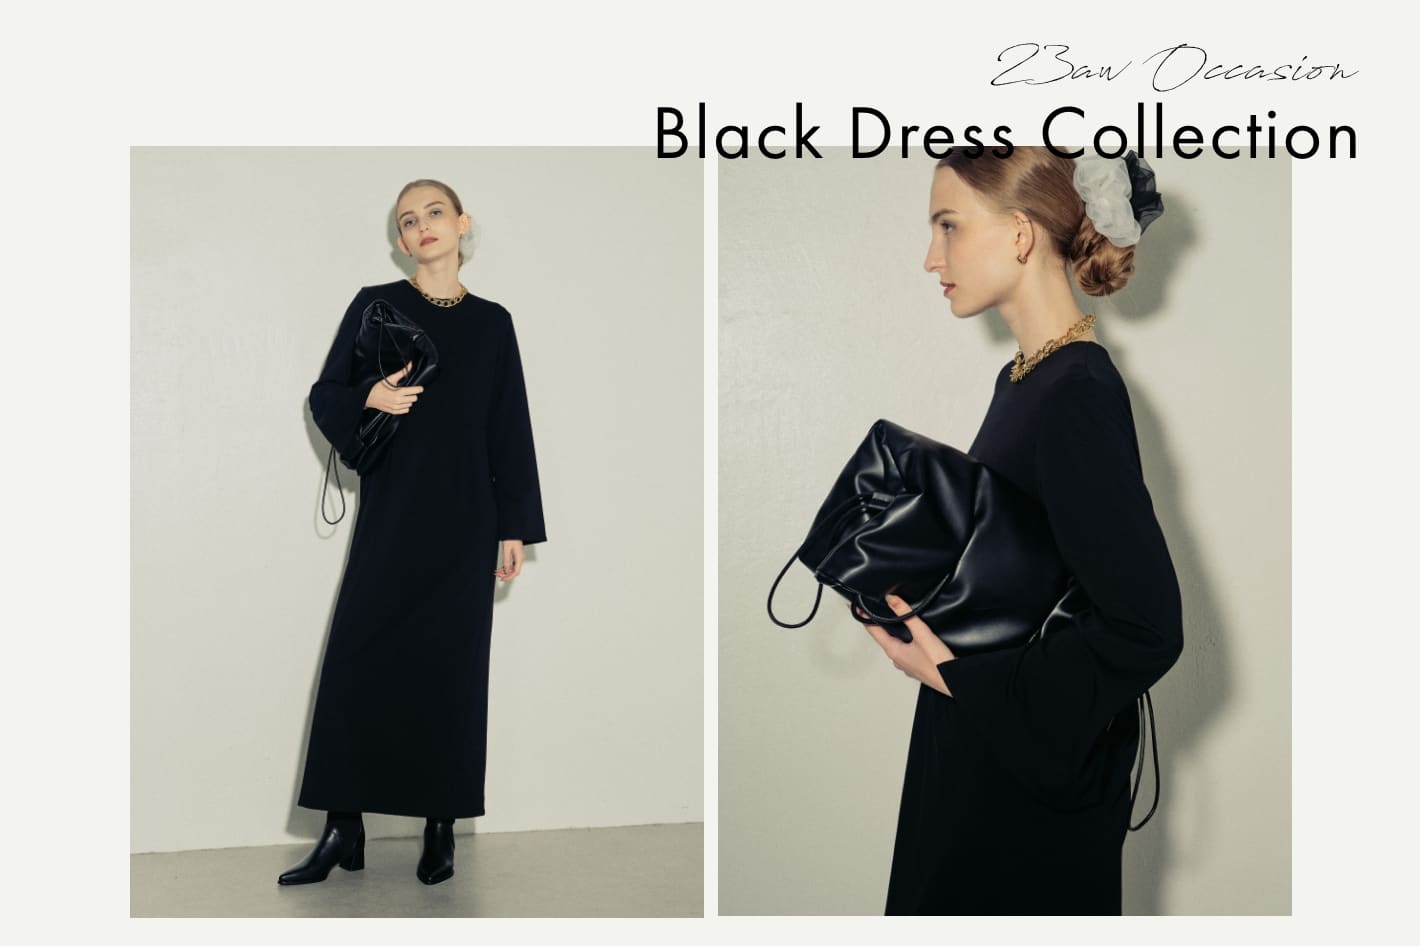 Omekashi 23aw Occasion ”Black Dress Collection”